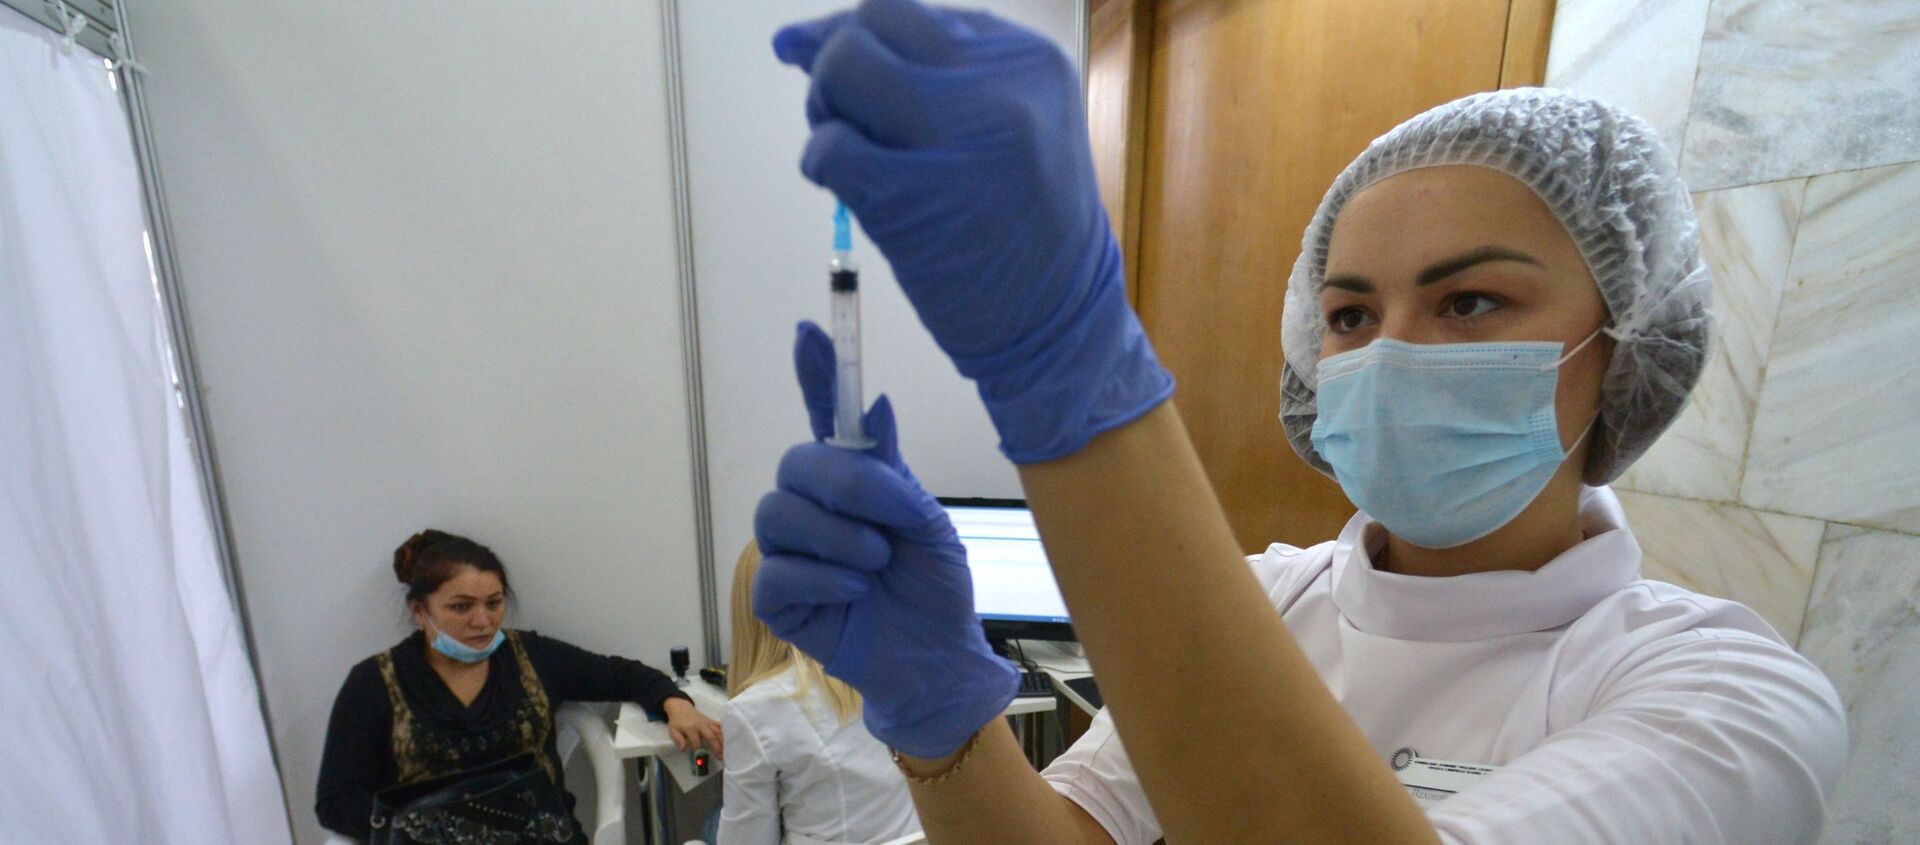 Медицинский работник наполняет шприц для вакцинации от коронавируса. Архивное фото - Sputnik Кыргызстан, 1920, 06.11.2021